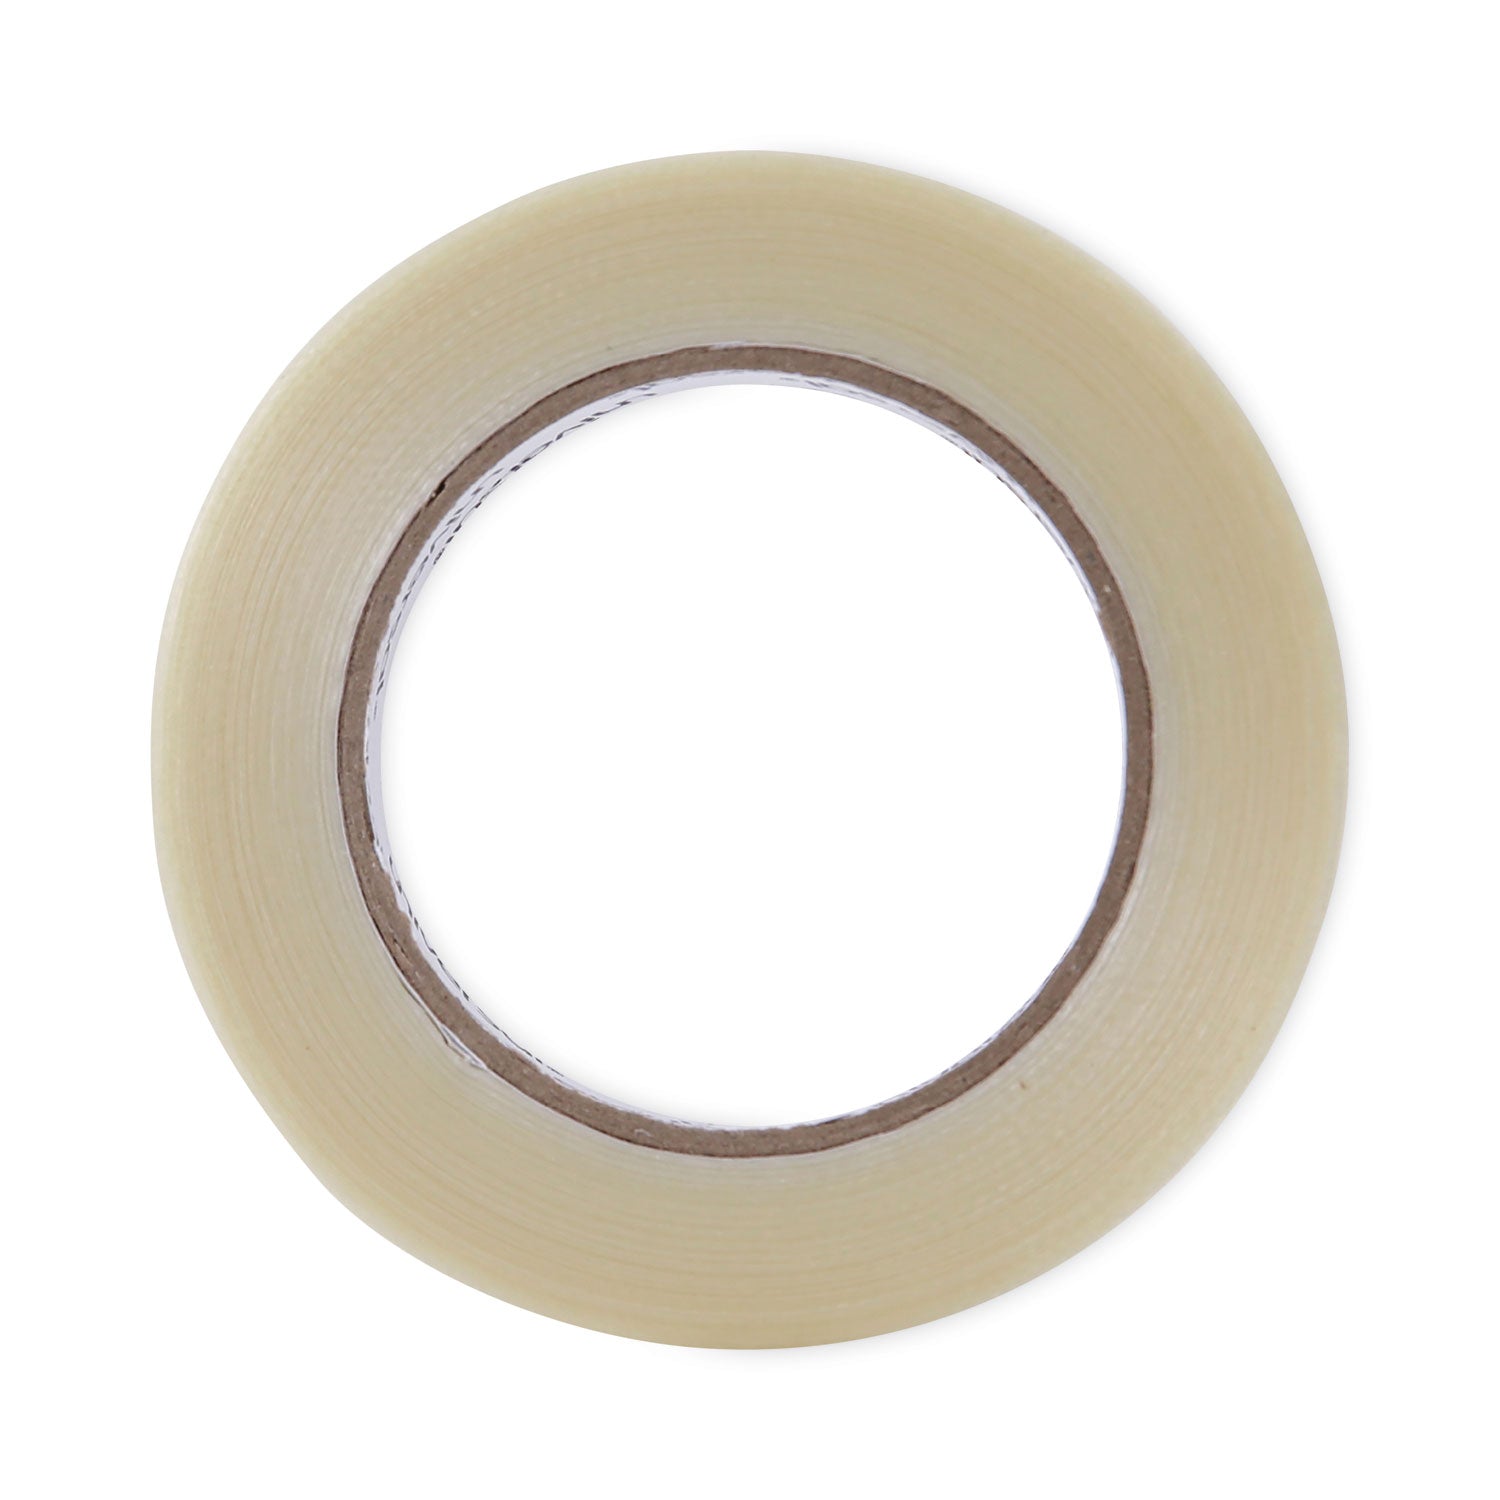 120# Utility Grade Filament Tape, 3" Core, 24 mm x 54.8 m, Clear - 